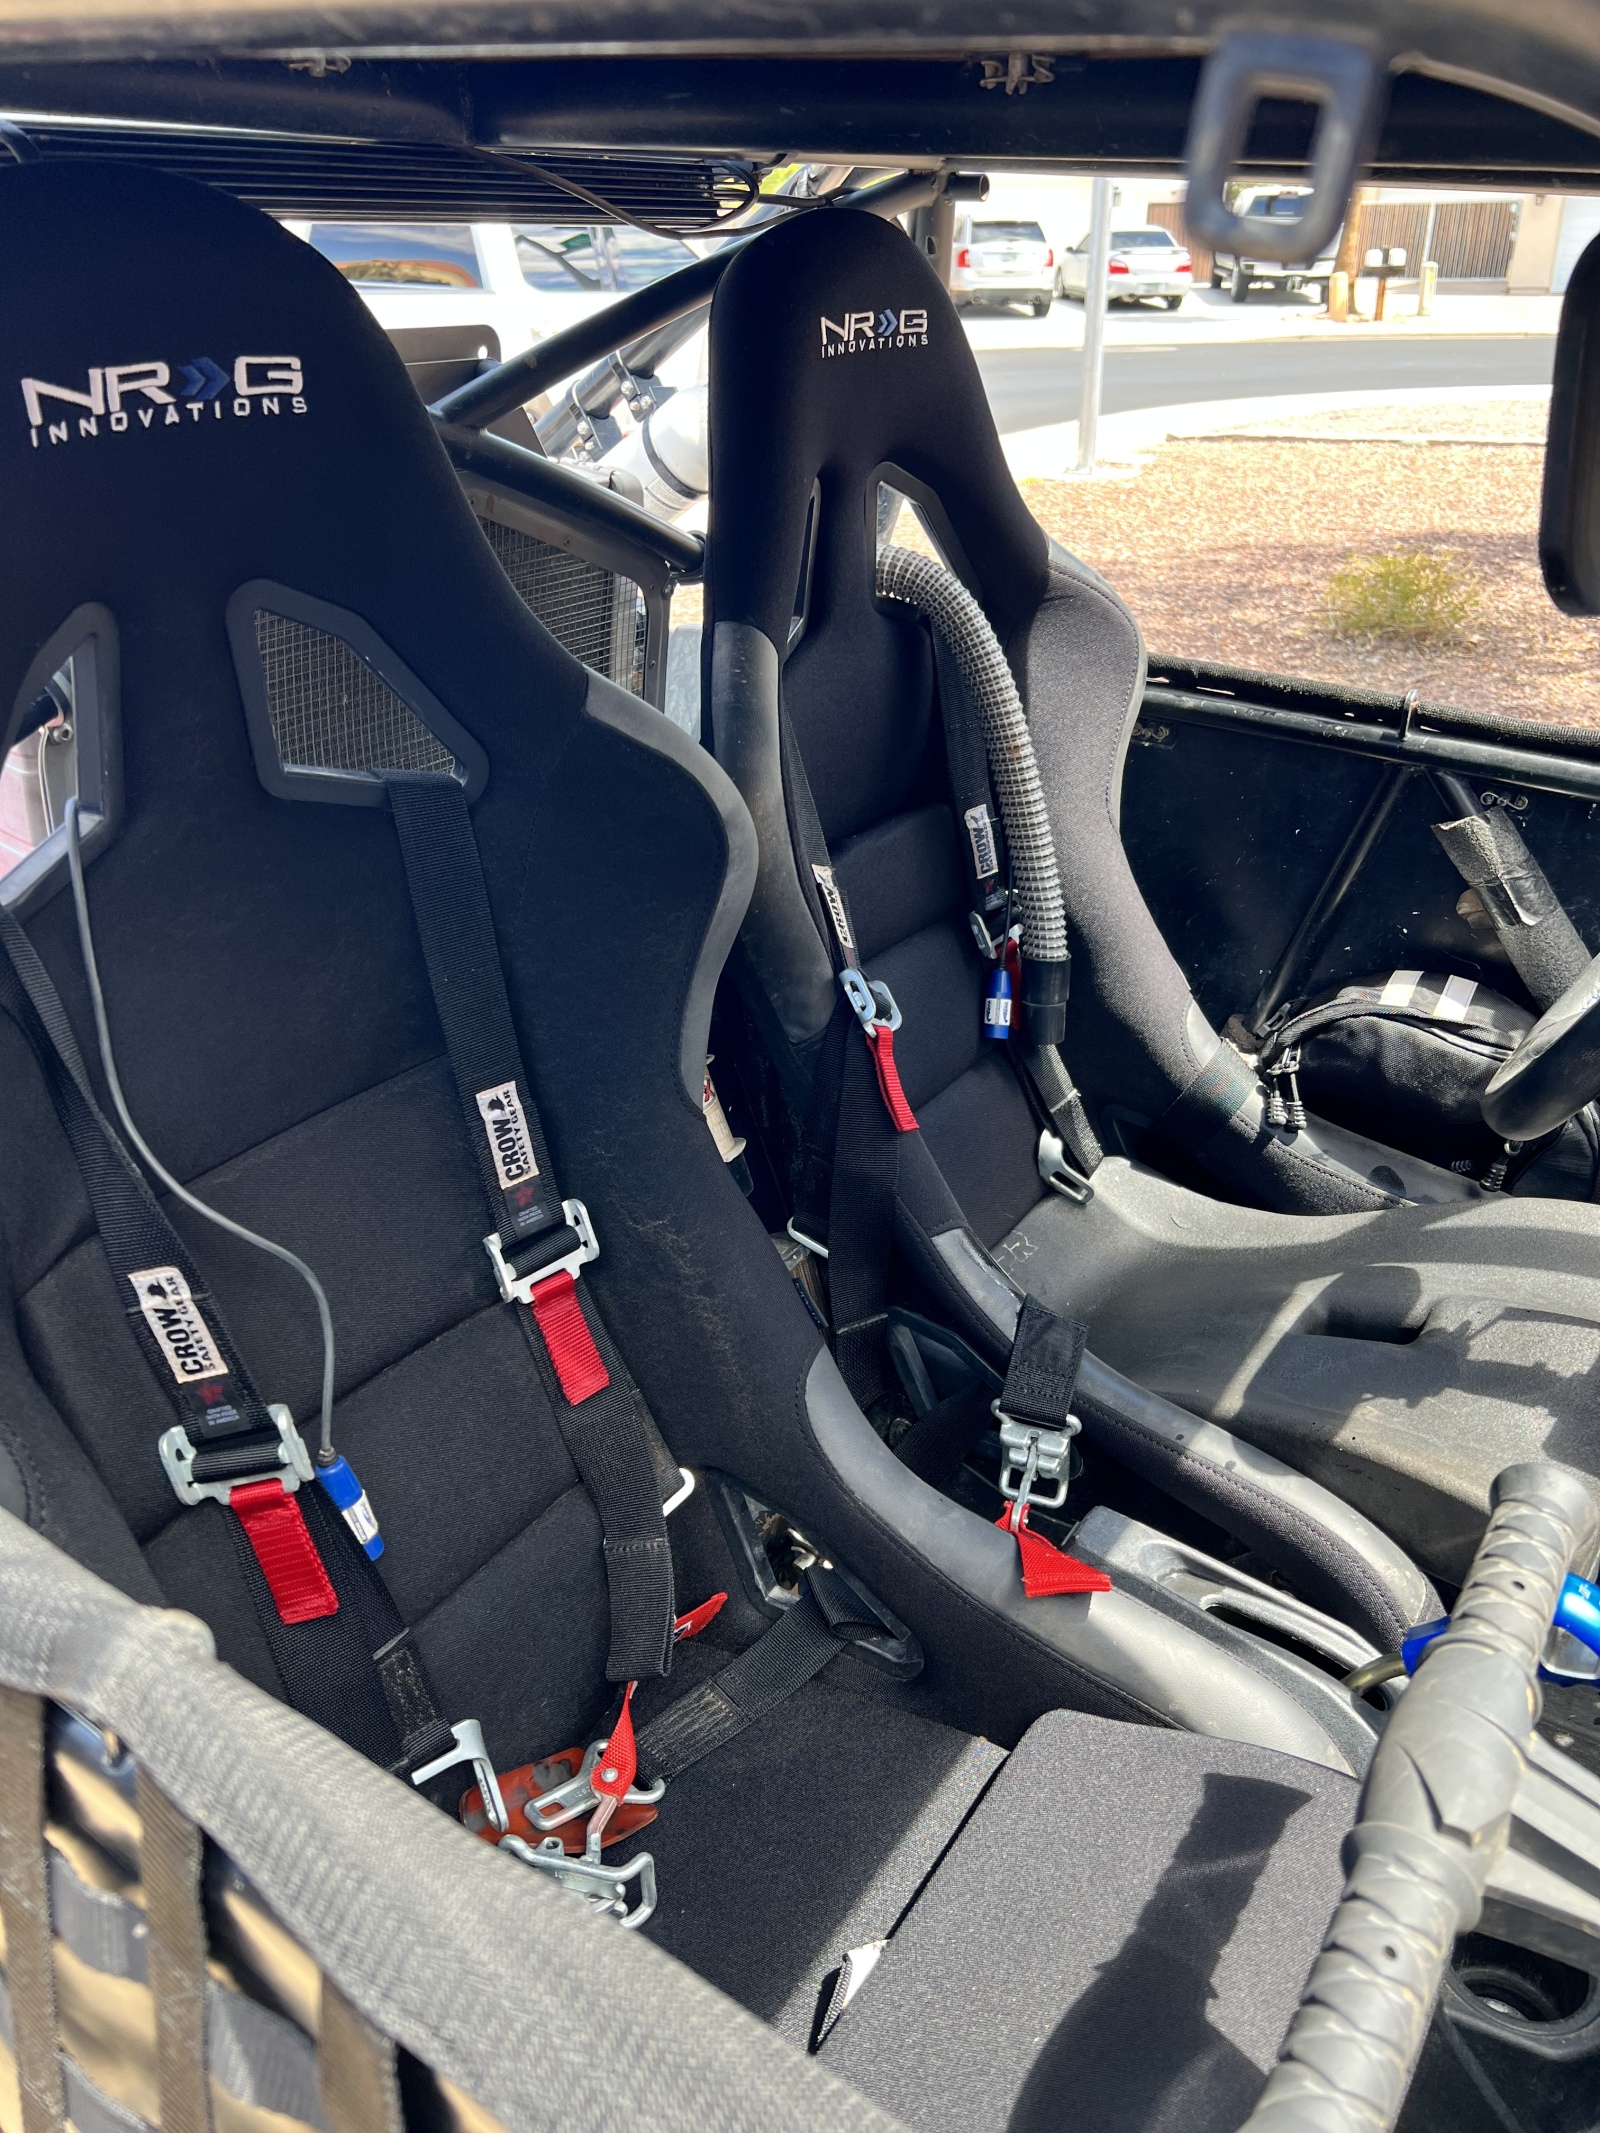 For Sale: 2018 Polaris RZR 570 Race Ready - photo6